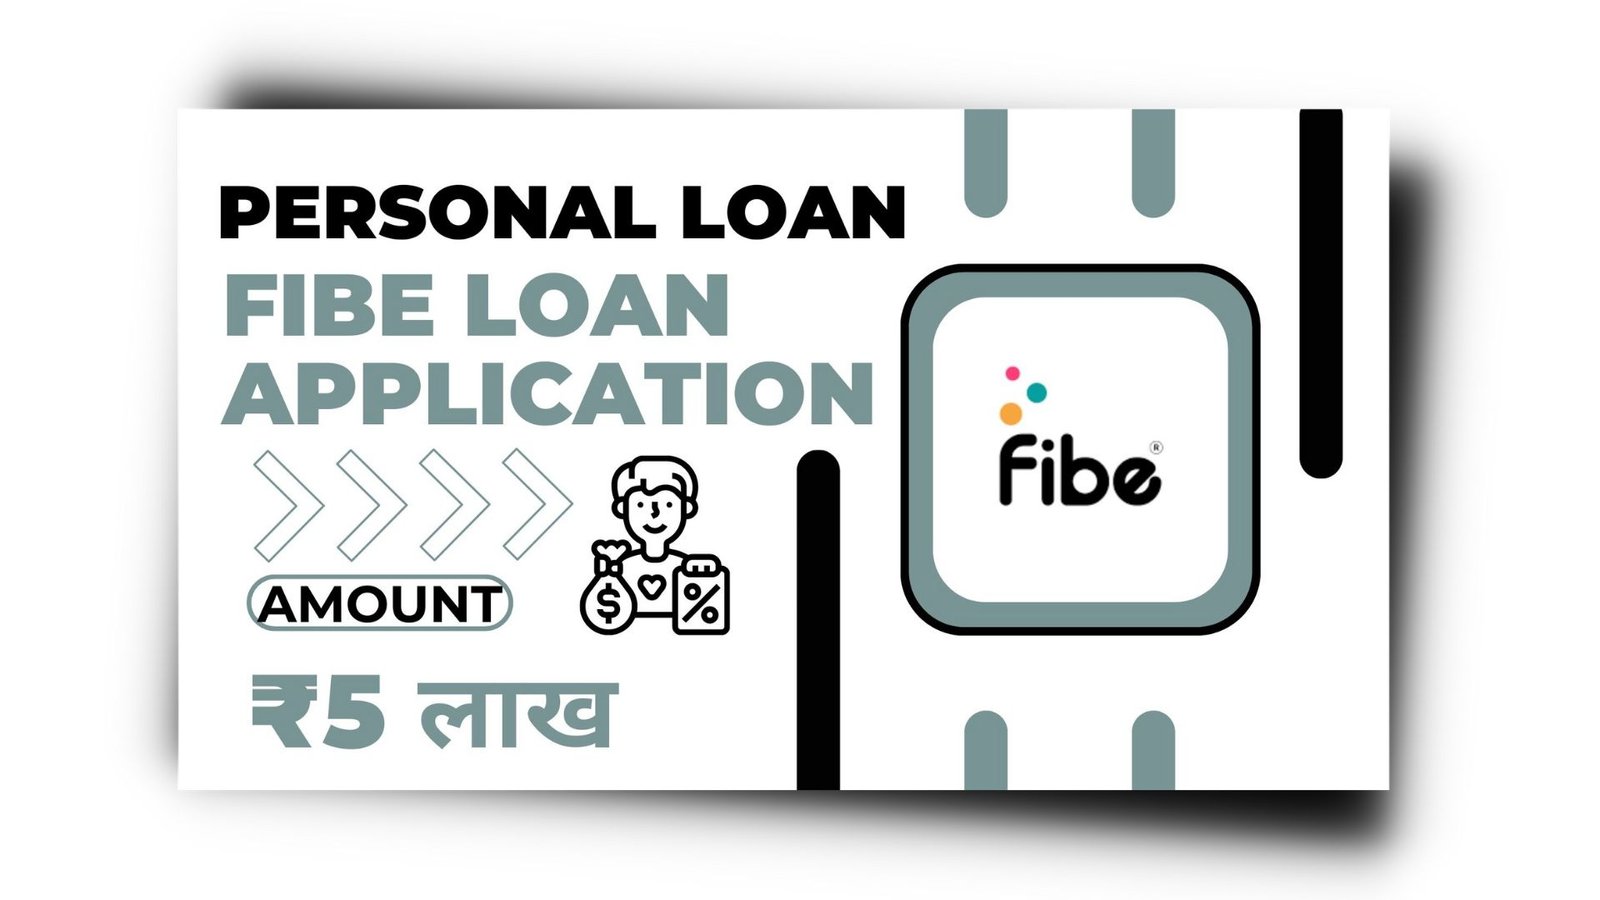 Fibe Loan App से लोन कैसे लें? Fibe Loan App Review 2023 |